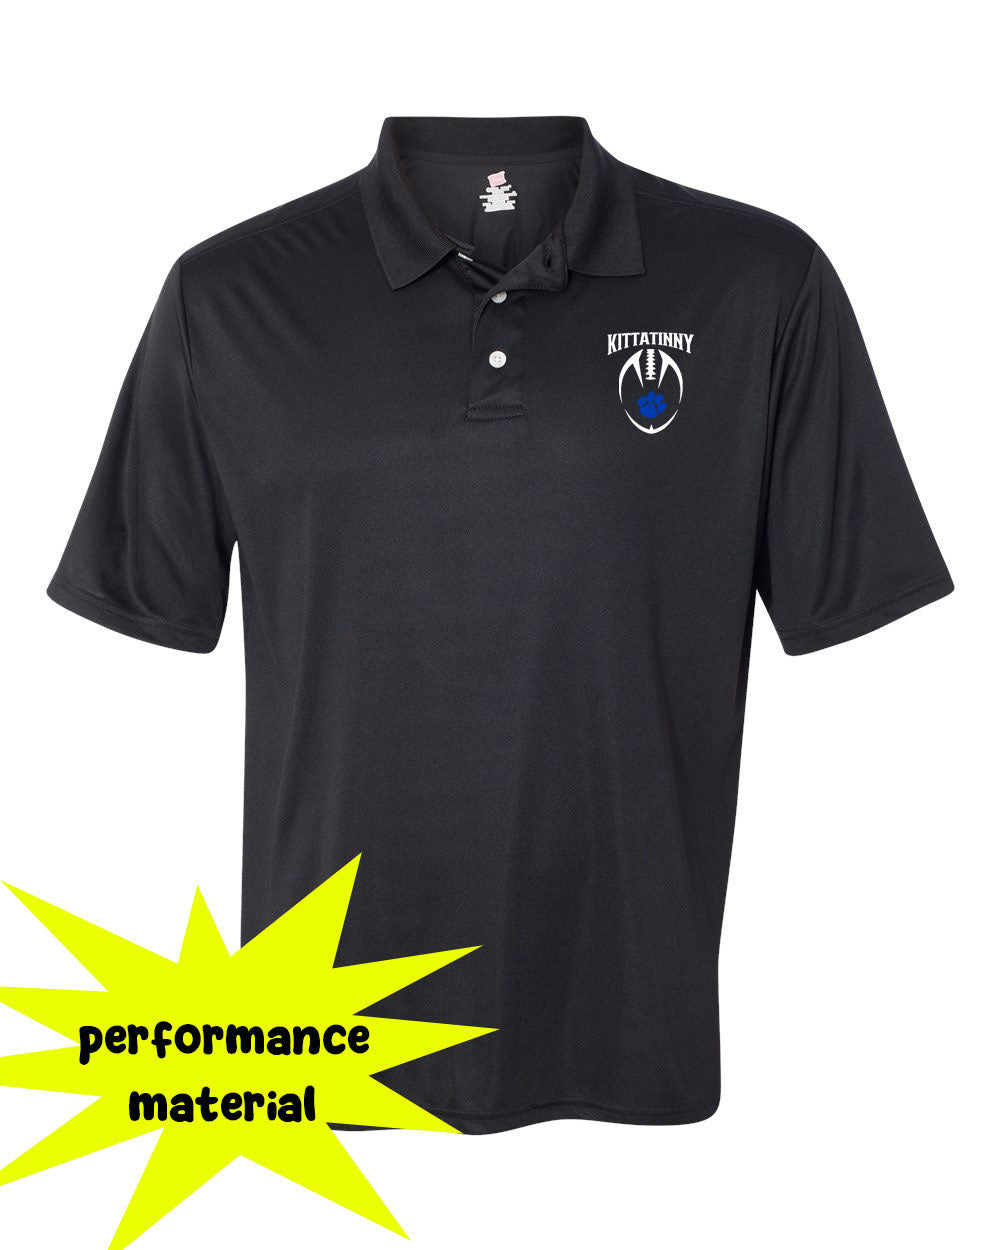 Kittatinny Football Design 8 Performance Material Polo T-Shirt